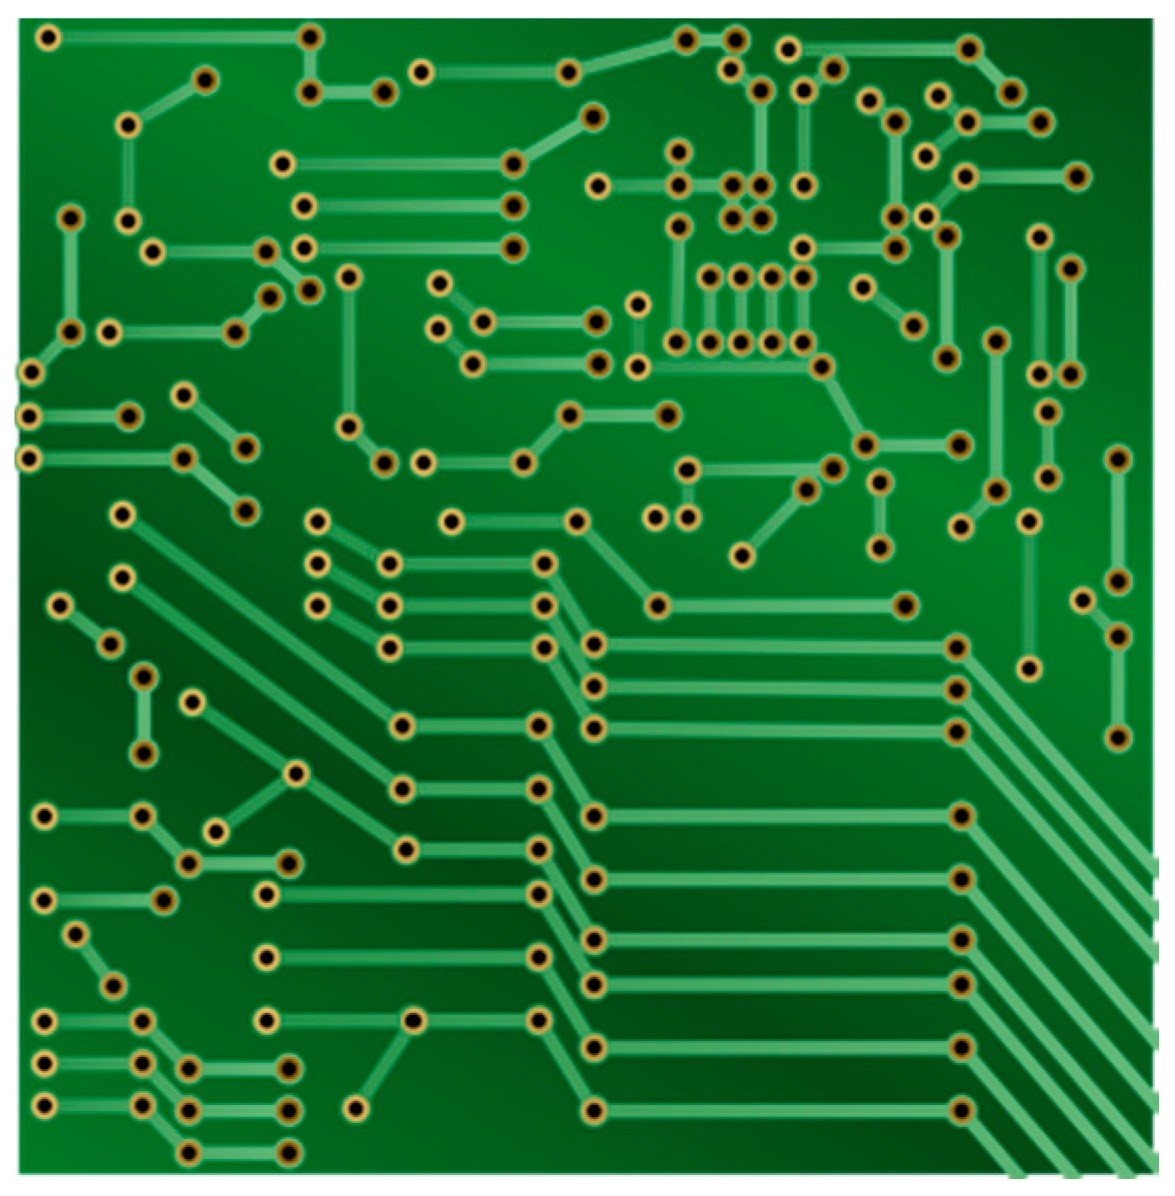 circuit board pattern png